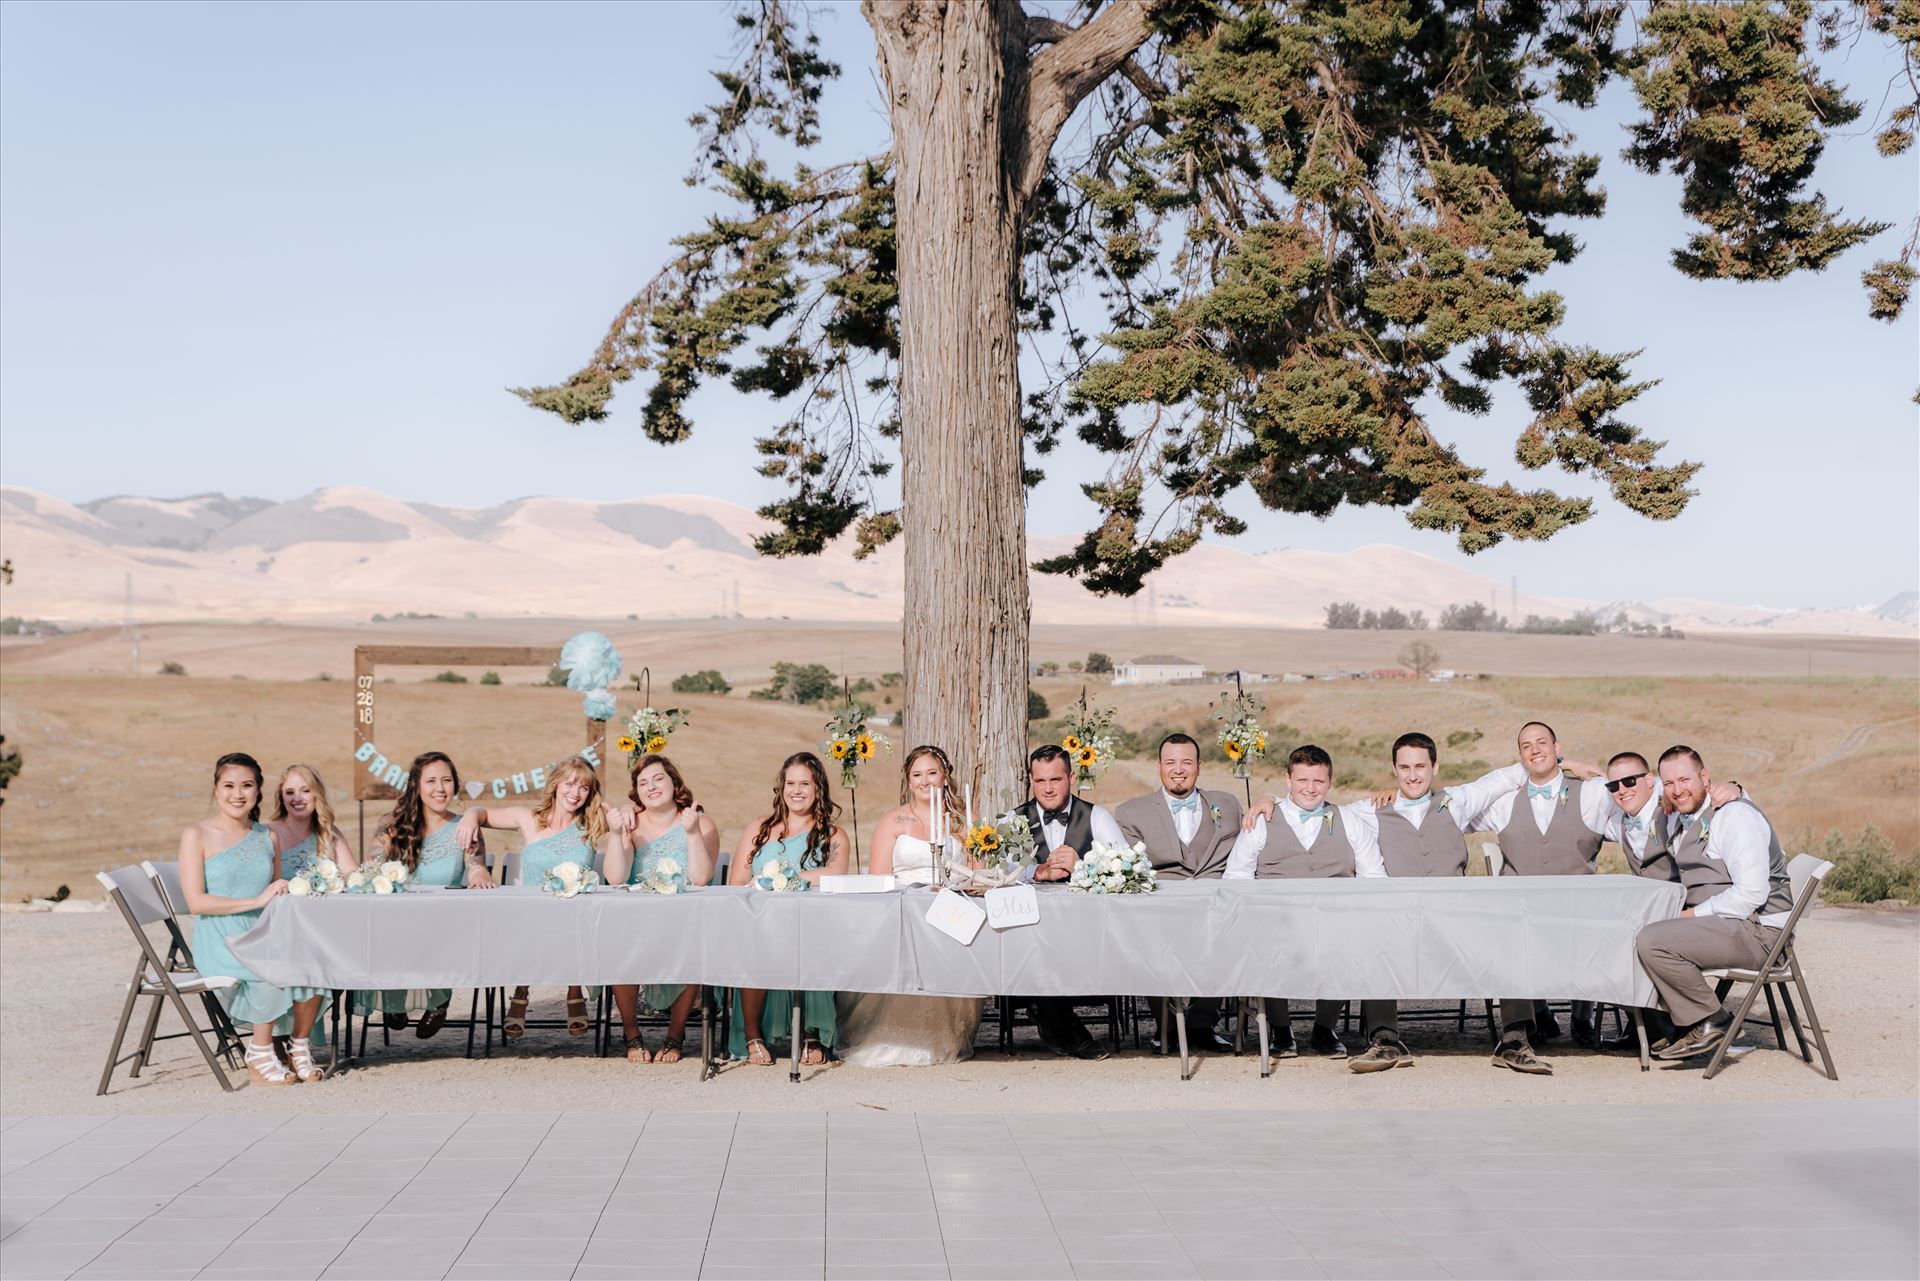 Cherie and Brandon 100 - Mirror's Edge Photography, a San Luis Obispo Wedding Photographer, captures a wedding at the Historic Dana Adobe in Nipomo California.  Head Table at the Dana Adobe. by Sarah Williams